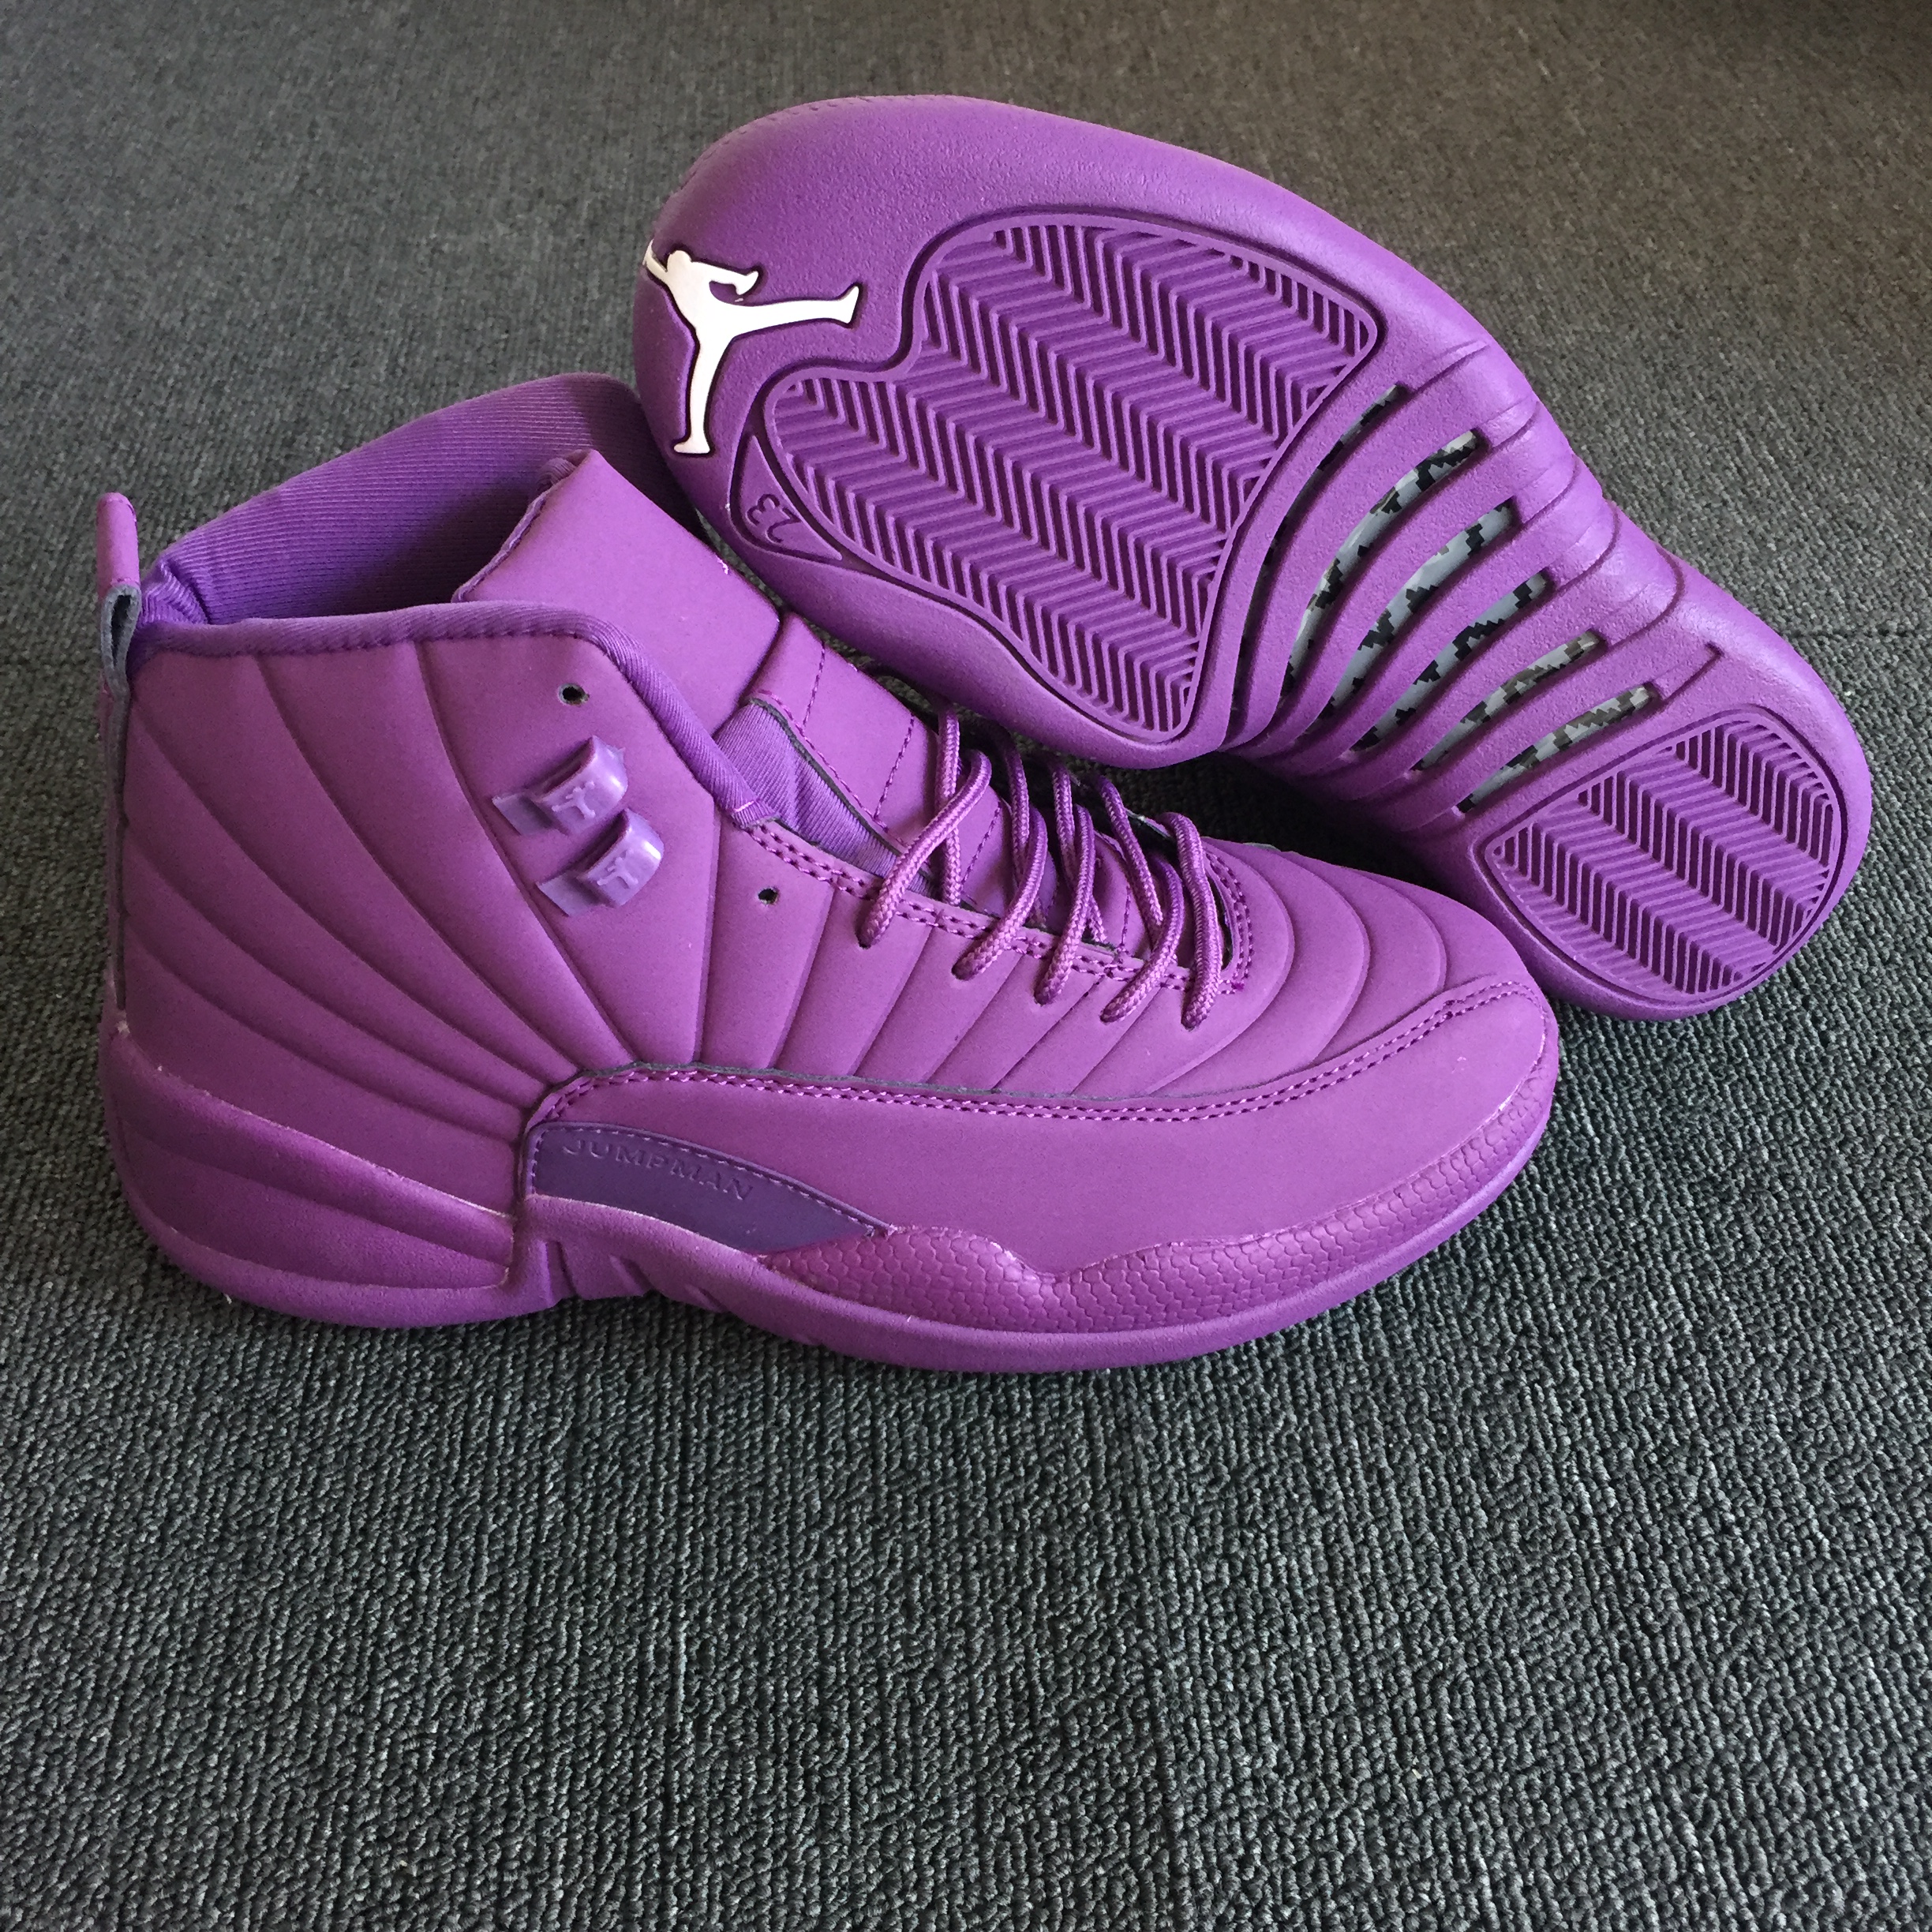 New Air Jordan 12 High Purple Shoes